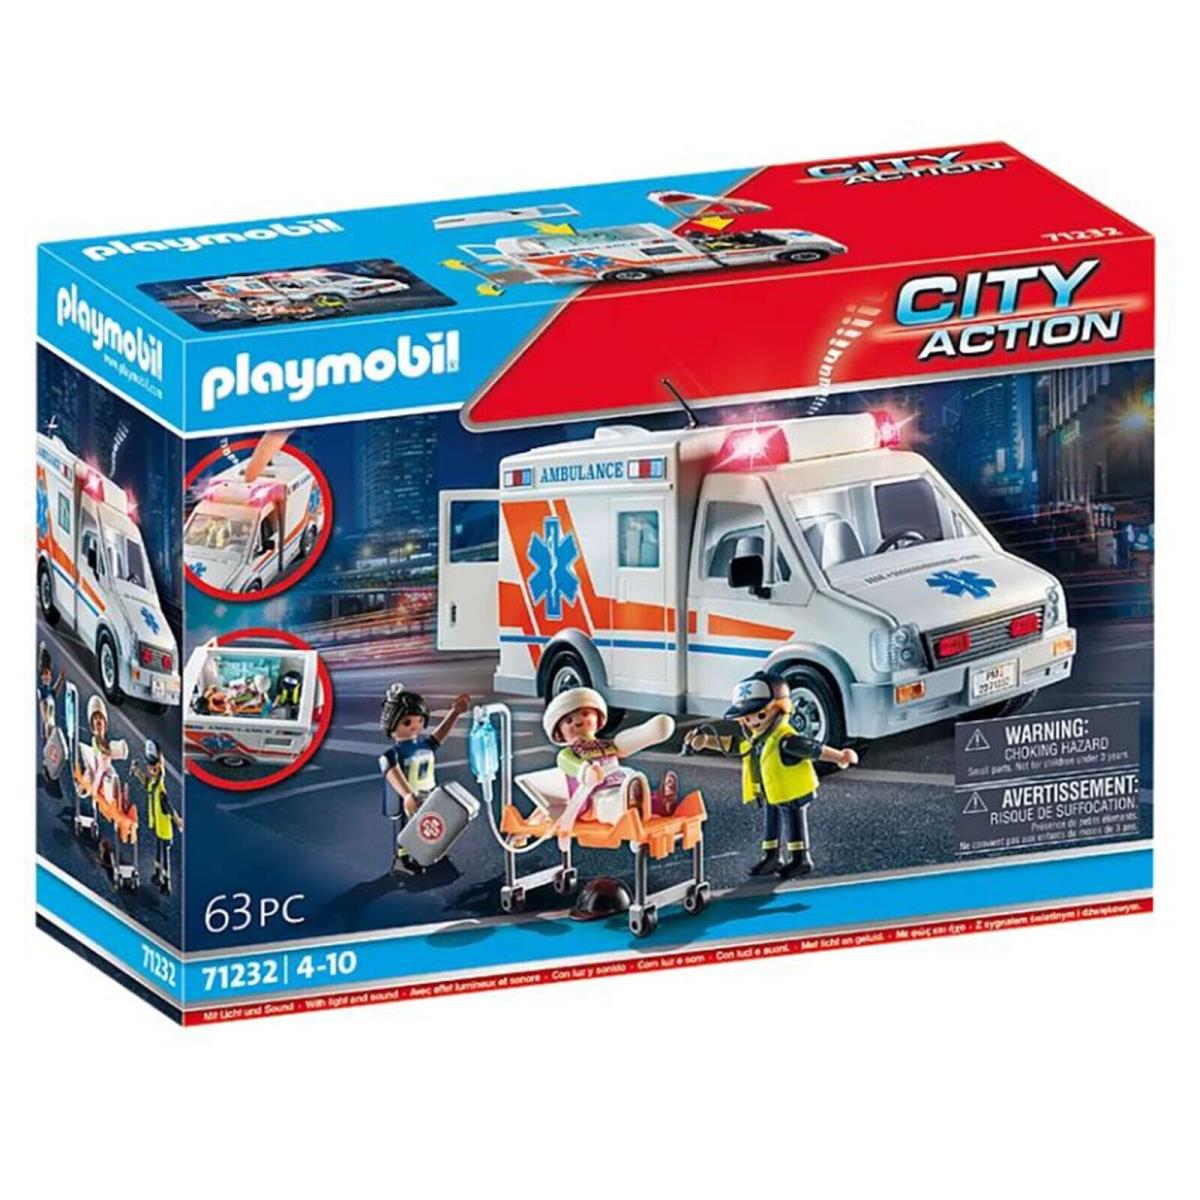 Playmobil City Action Ambulance Building Set 71232